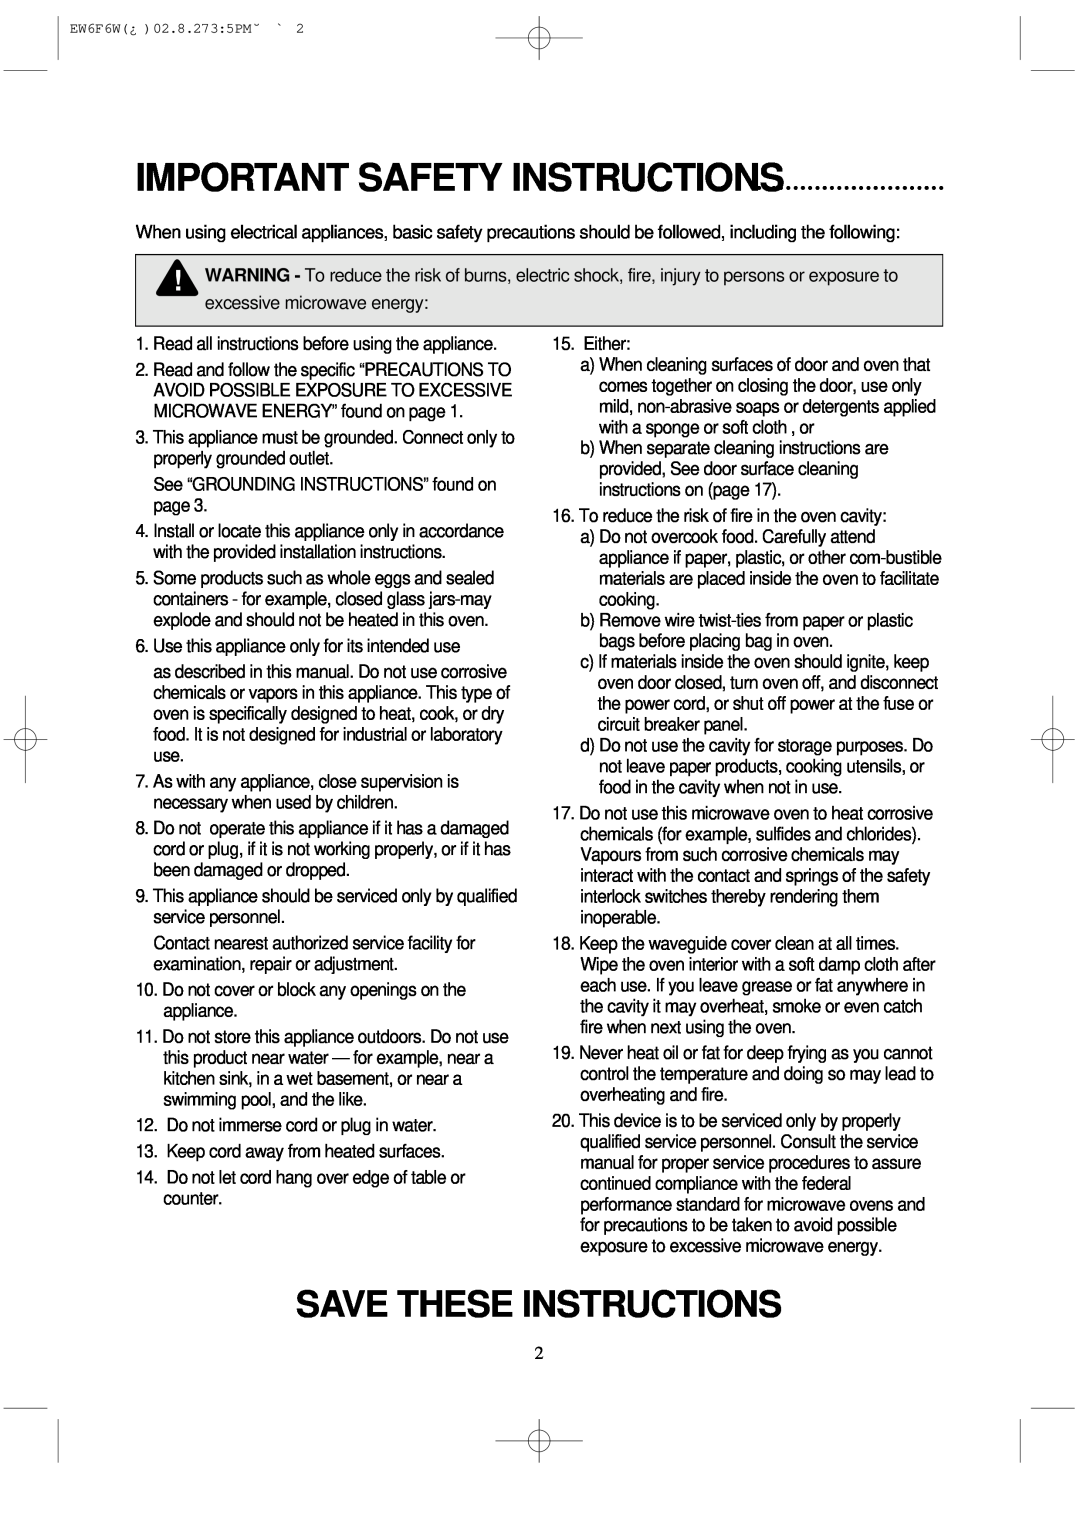 Daewoo EW6F6W instruction manual Important Safety Instructions, Save These Instructions 